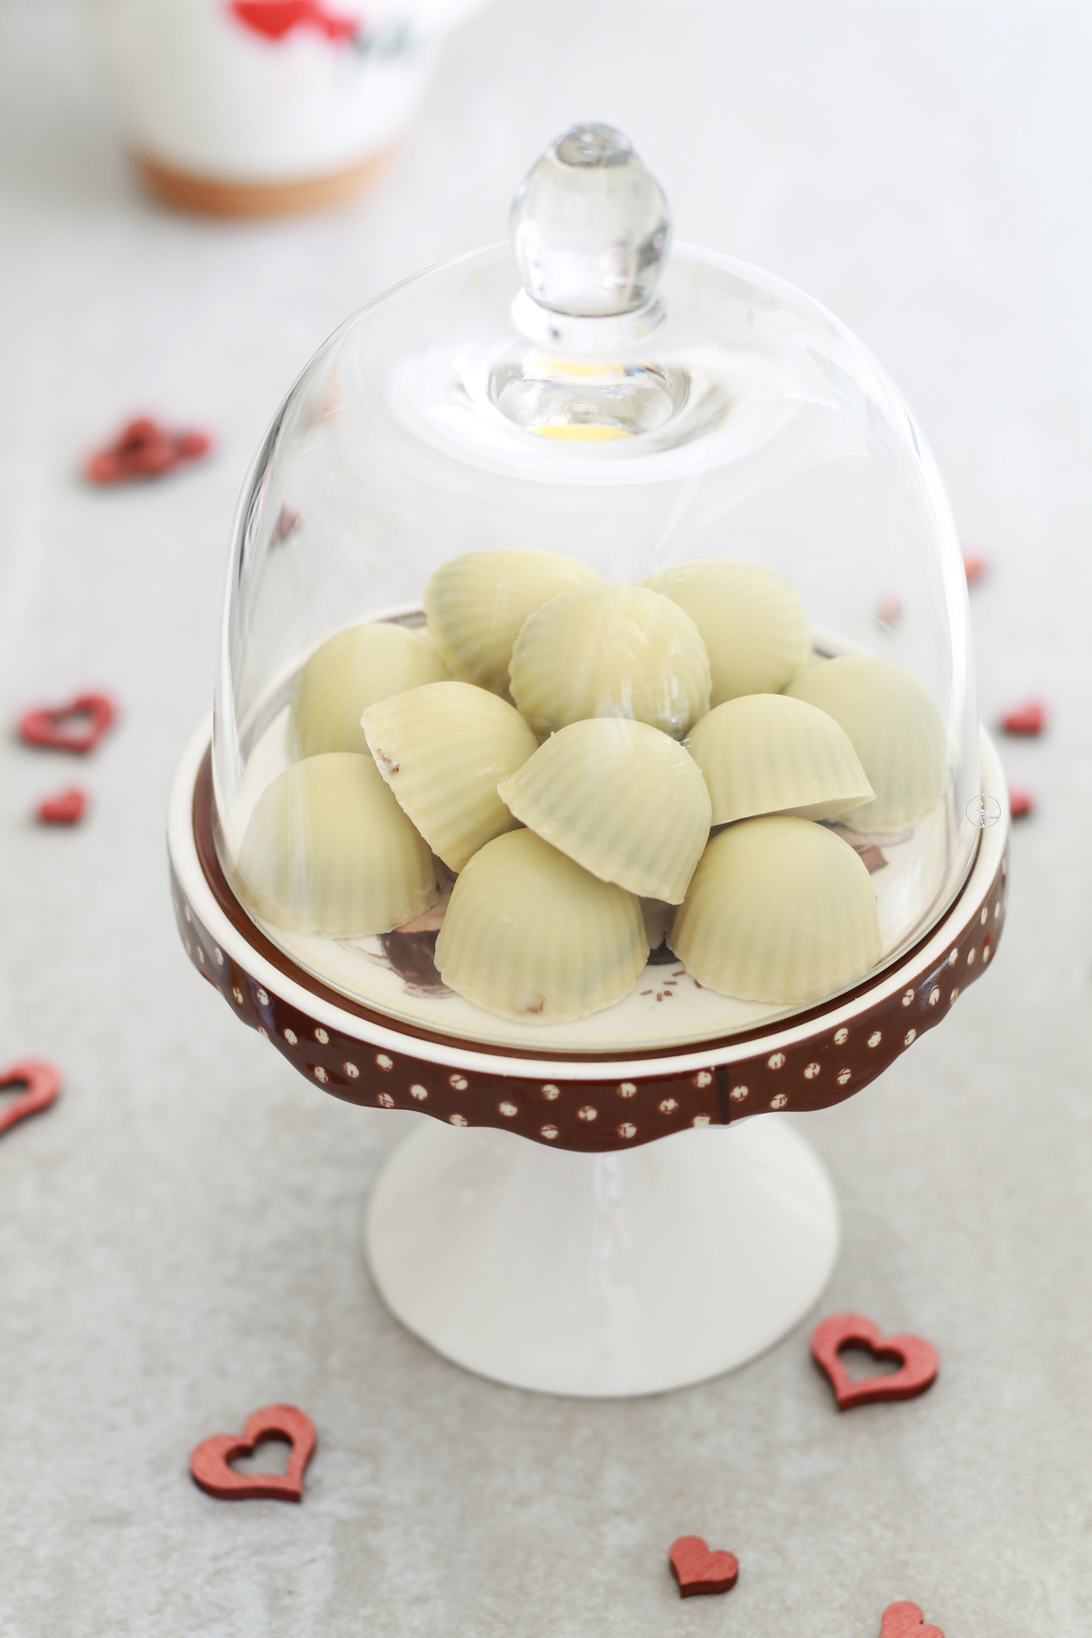 Praline al cioccolato bianco e fondente per San Valentino - La Cassata Celiaca